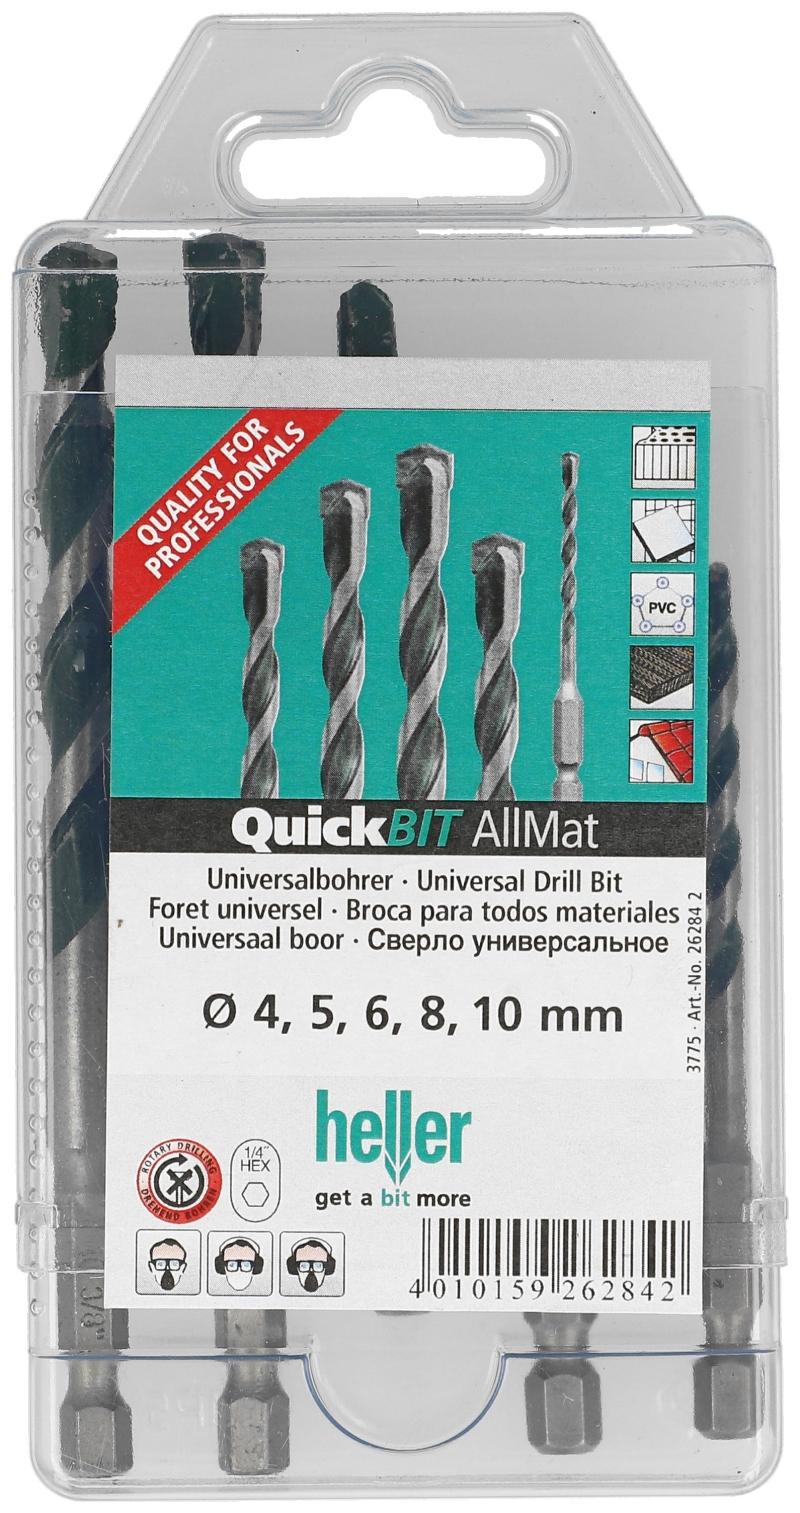 Heller universal drill set 4,5,6,8,10 mm